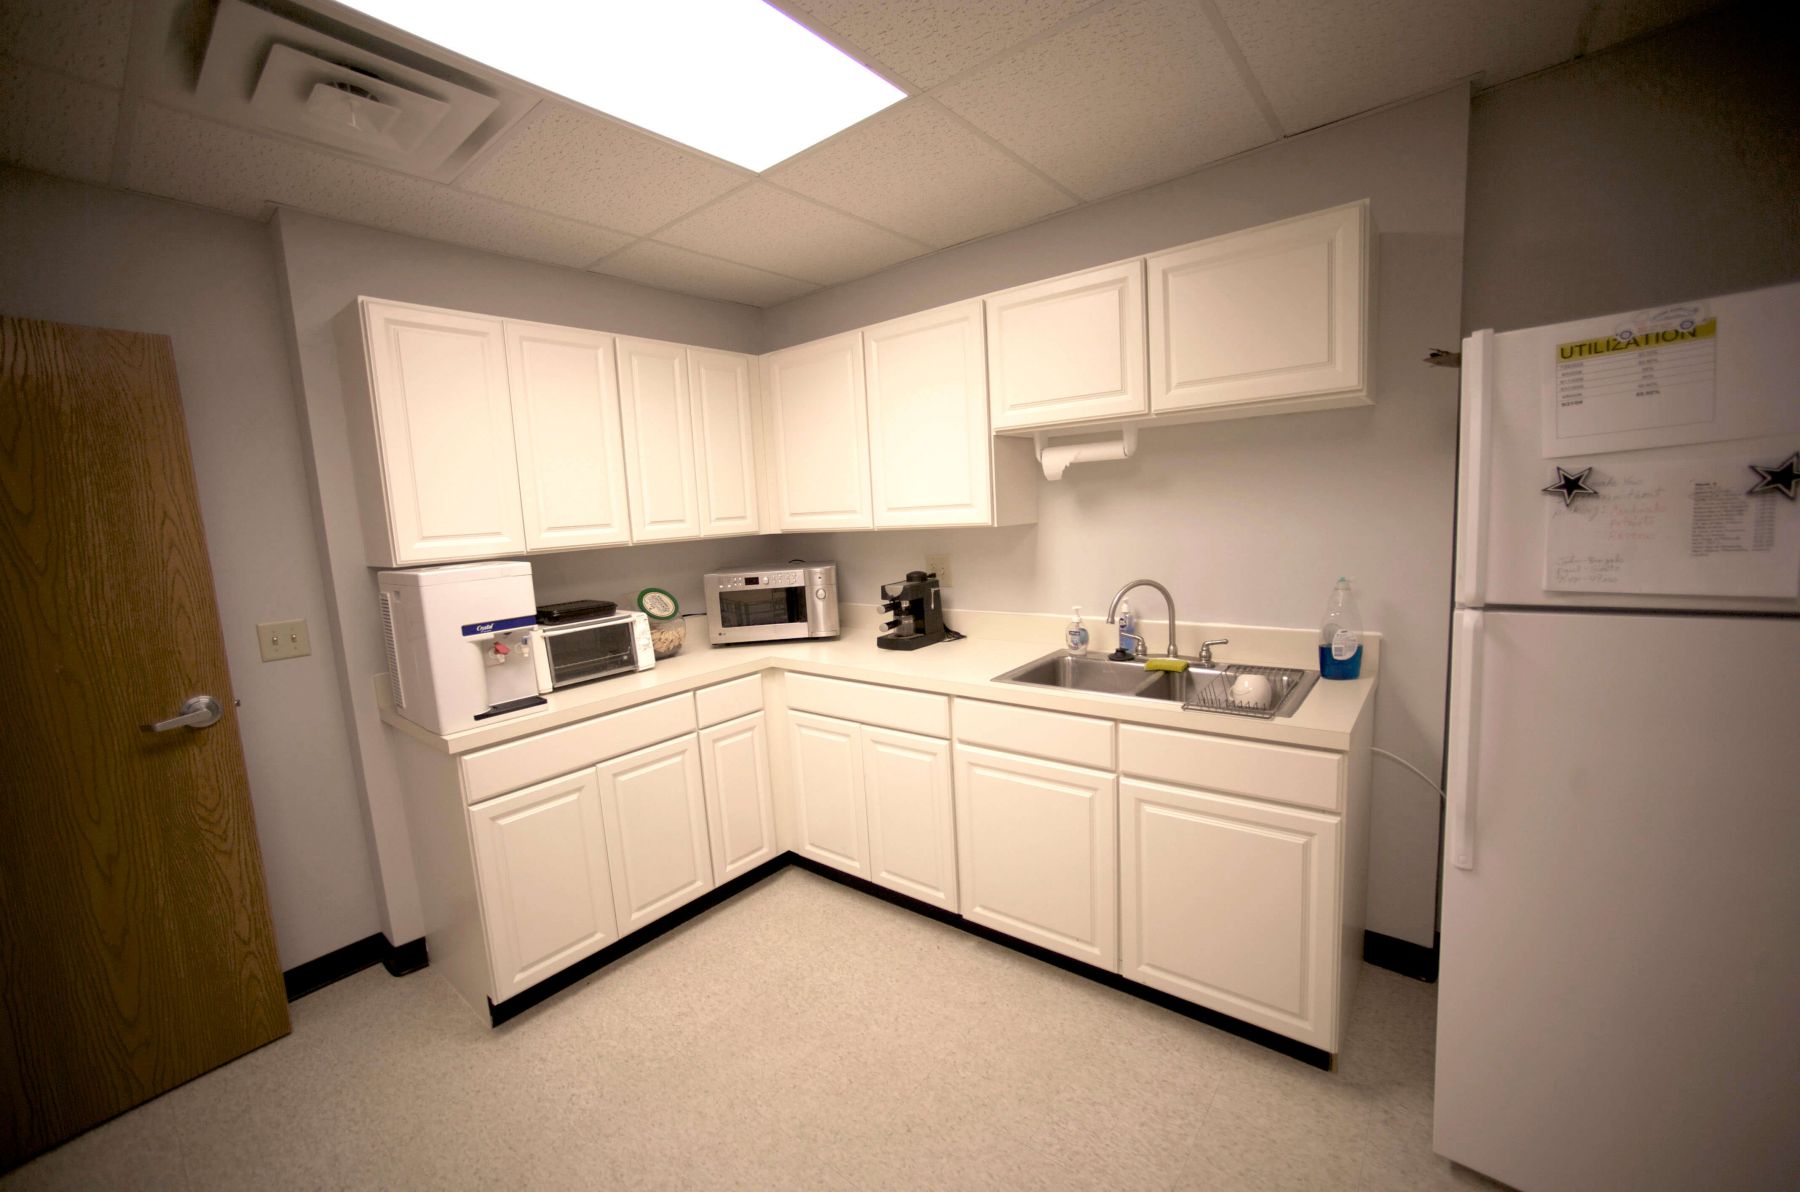 Sibley-Hospital-DC-Modular-Swing-Space-kitchen